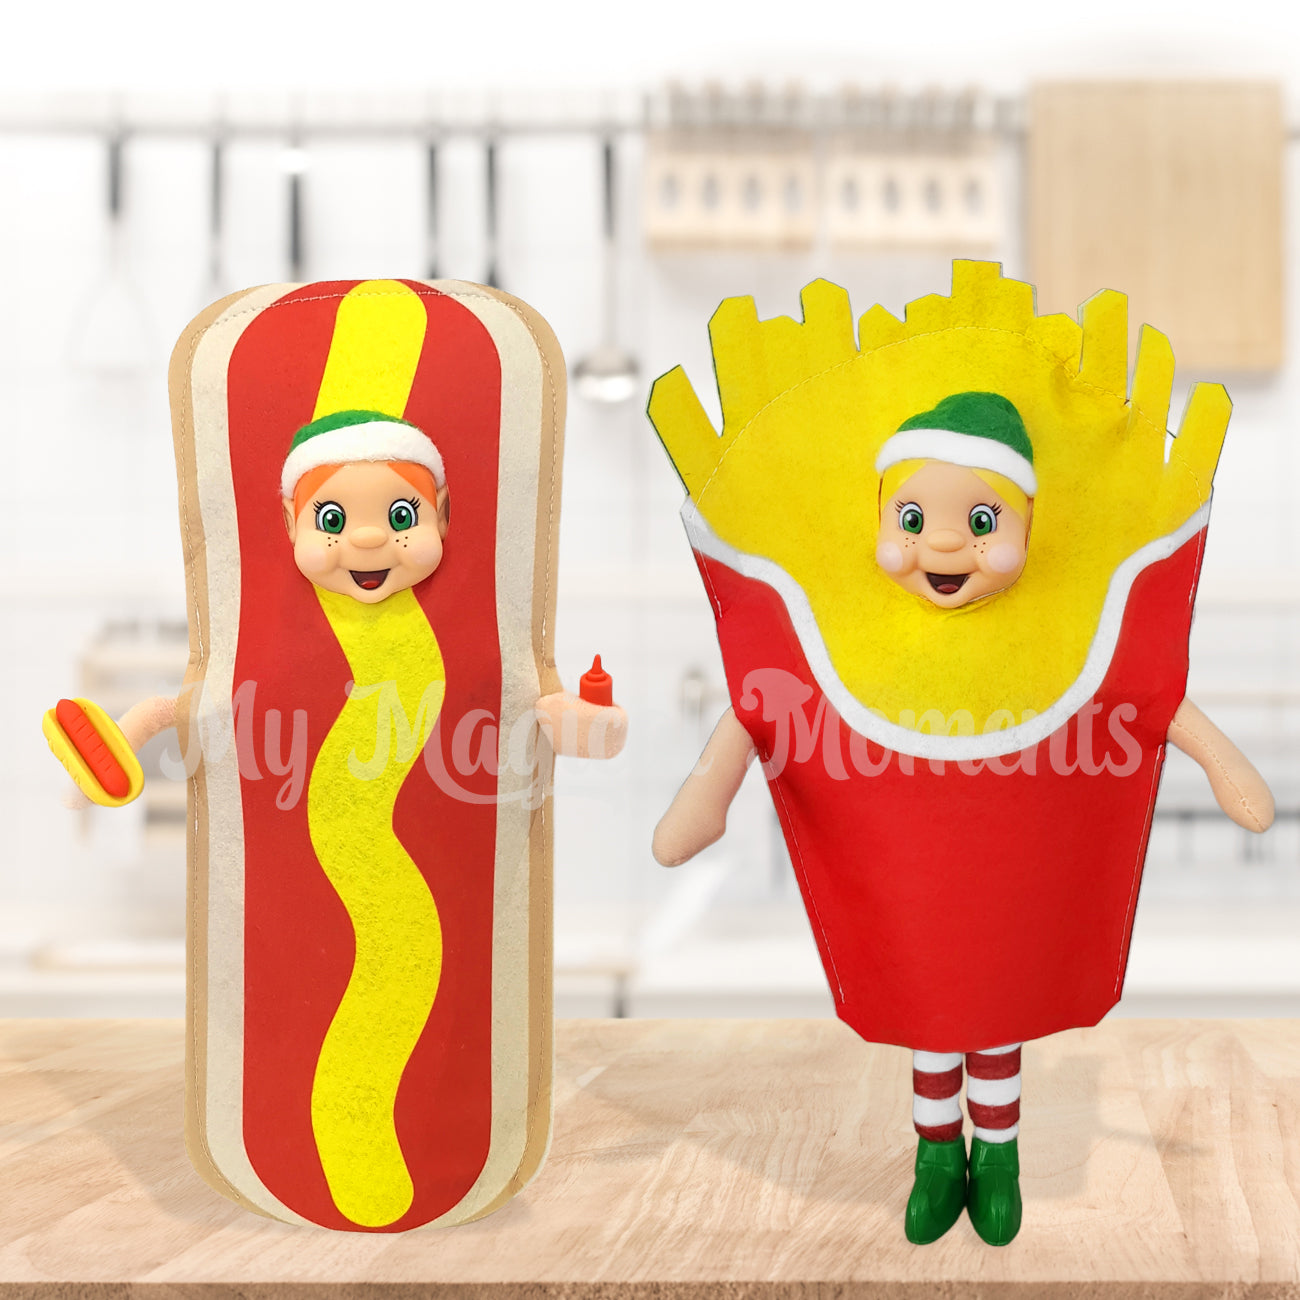 Elf Costumes Hot Dog & Fries worn by My Elf Friends